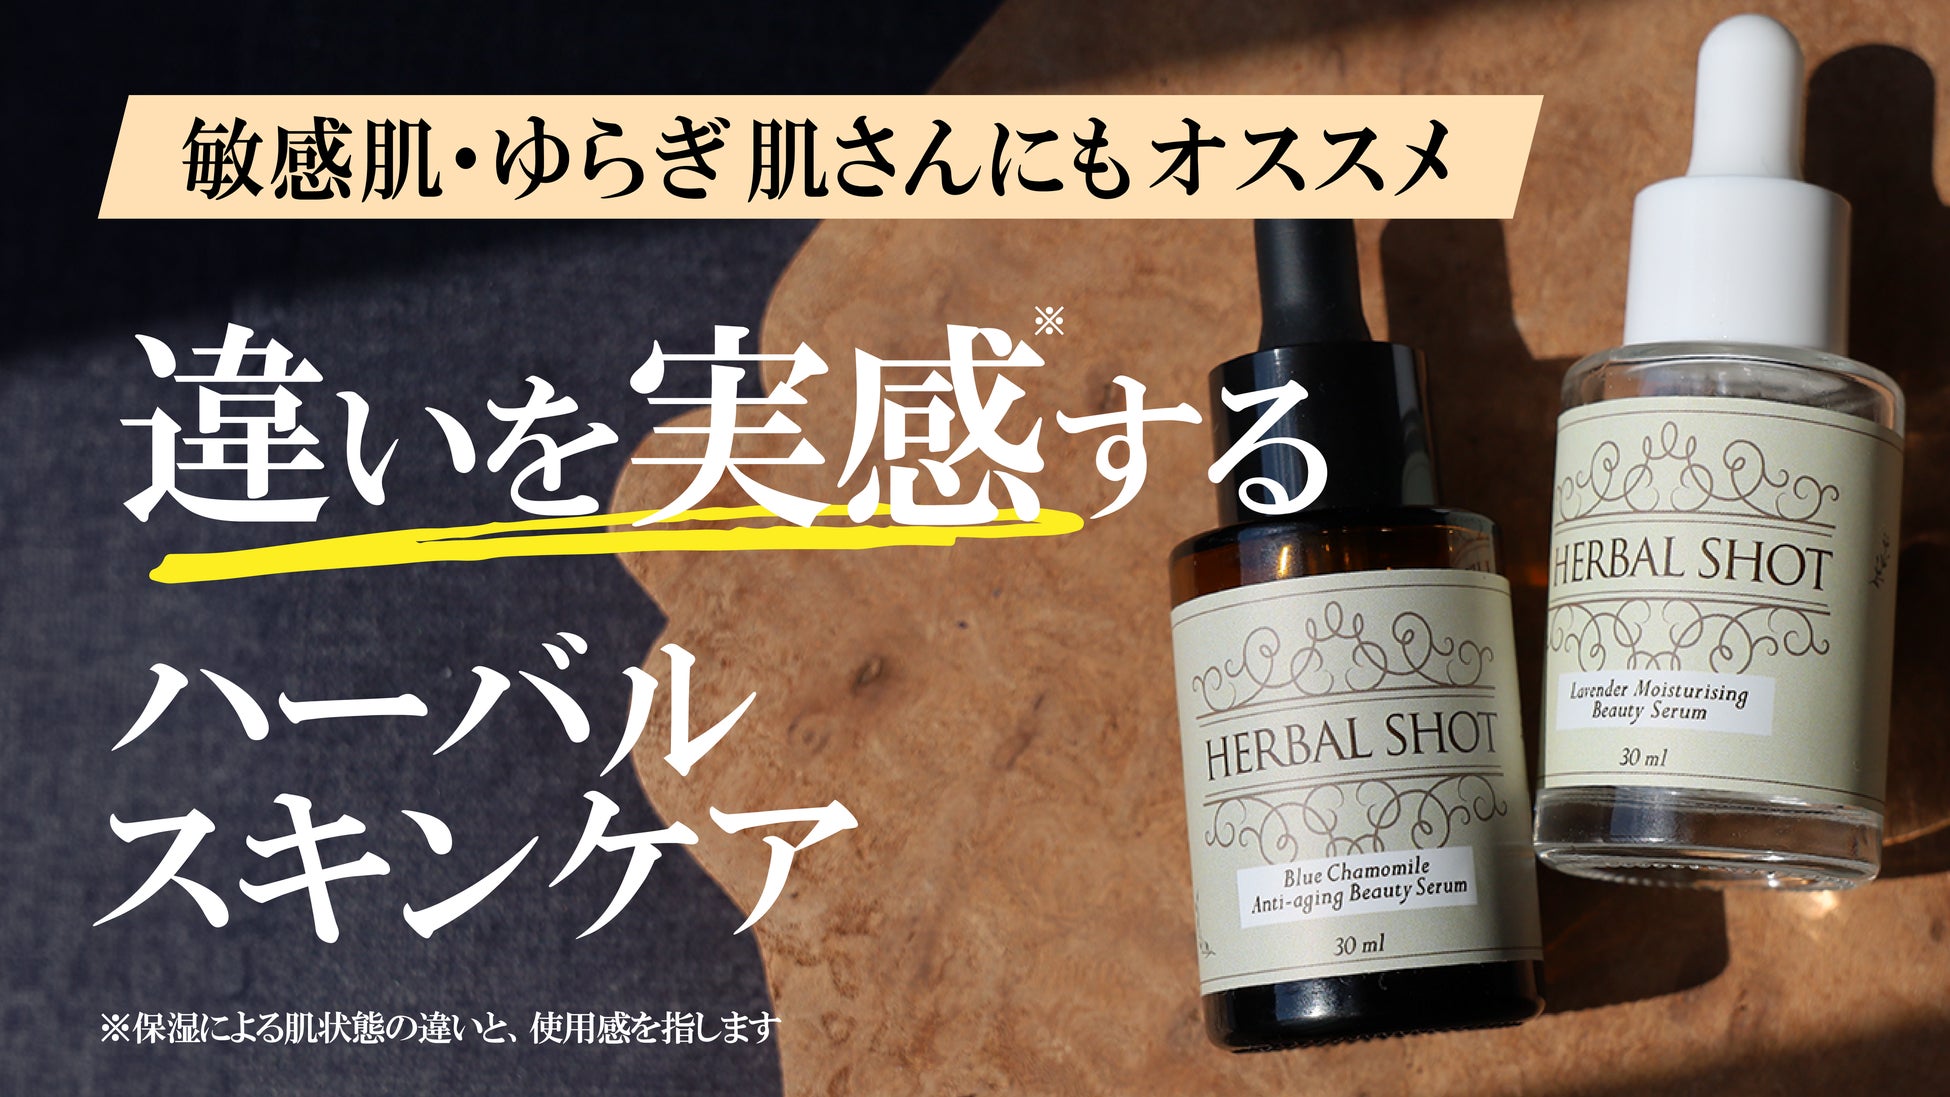 Makuake目標達成率241%！コスメ第3勢力・タイ発ゆらぎ肌・敏感肌向け新定番オーガニックスキンケアブランド『Herbal Shot』4月18日より販売開始